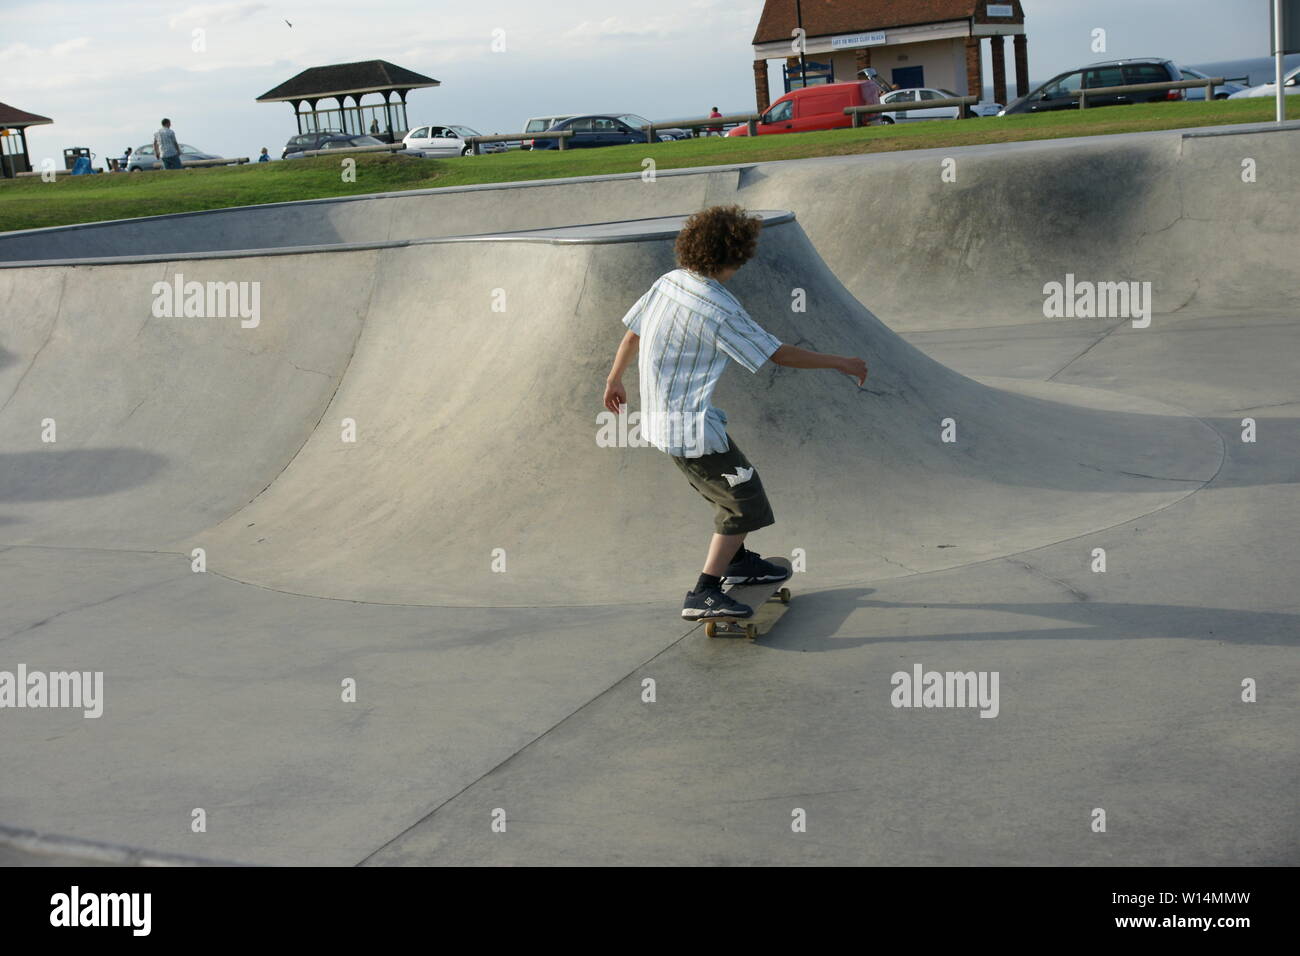 skateboarders Stock Photo